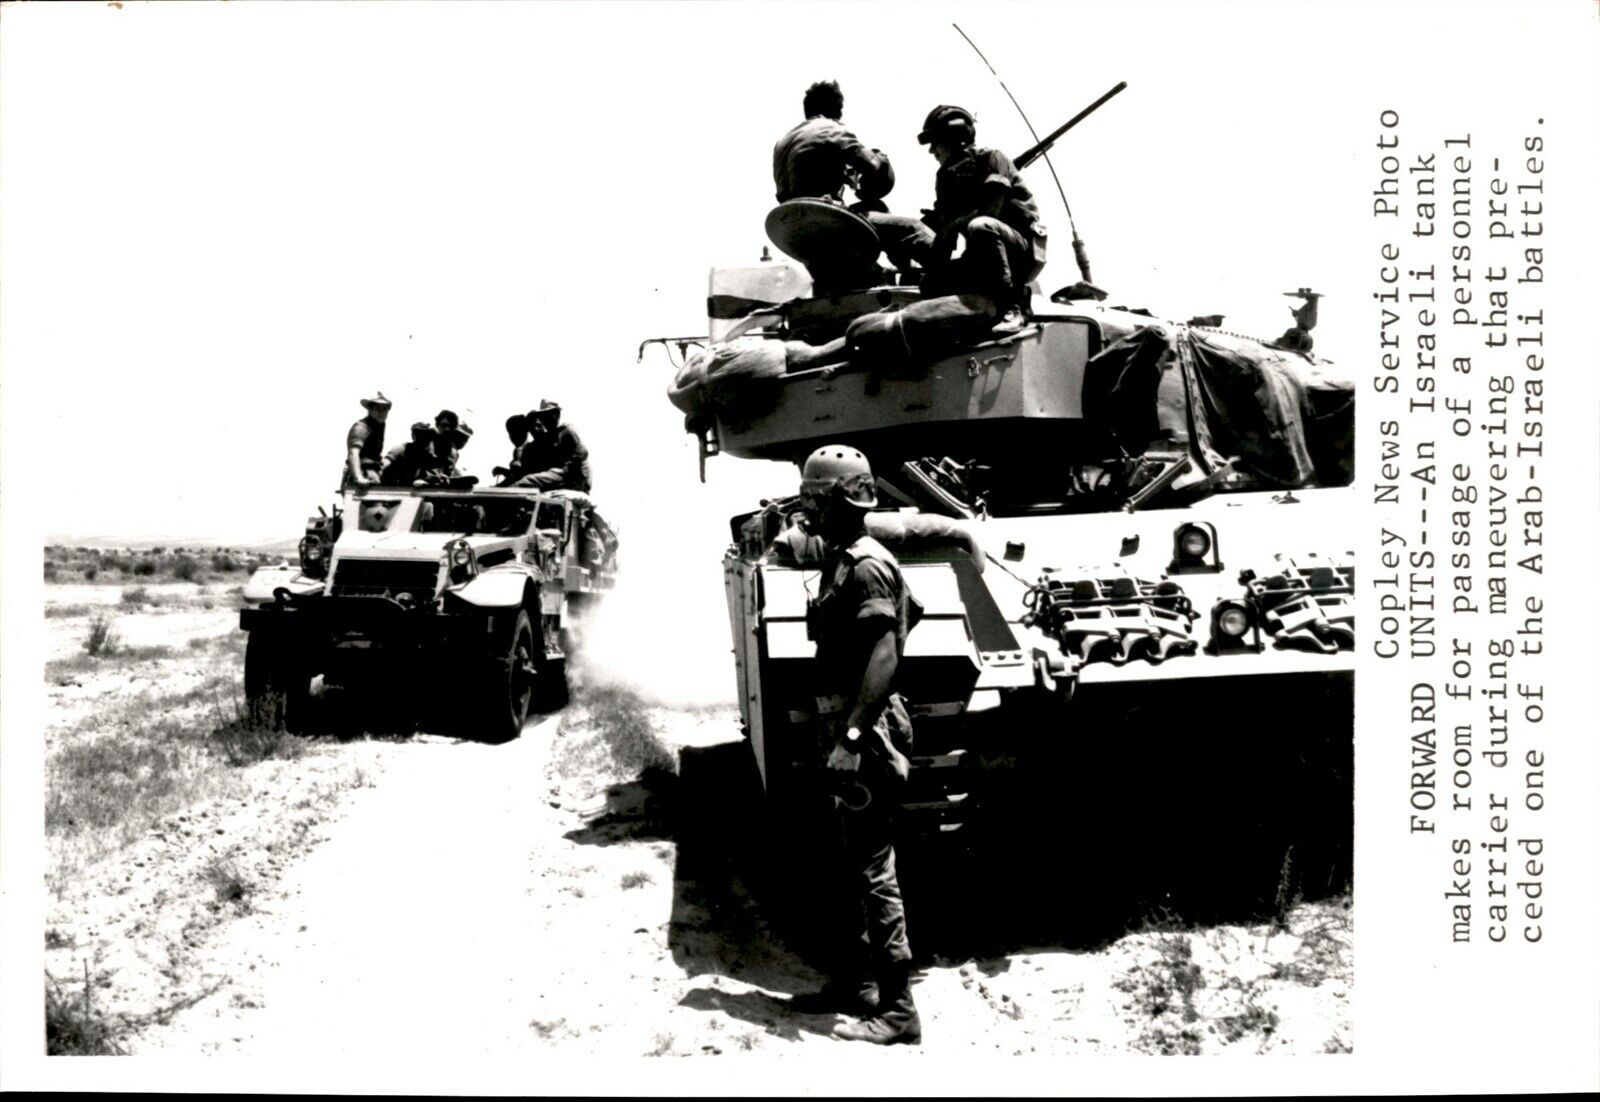 LG912 1967 Wire Photo FORWARD UNITS ISRAELI TANK MANEUVERS ARAB-ISRAELI BATTLE